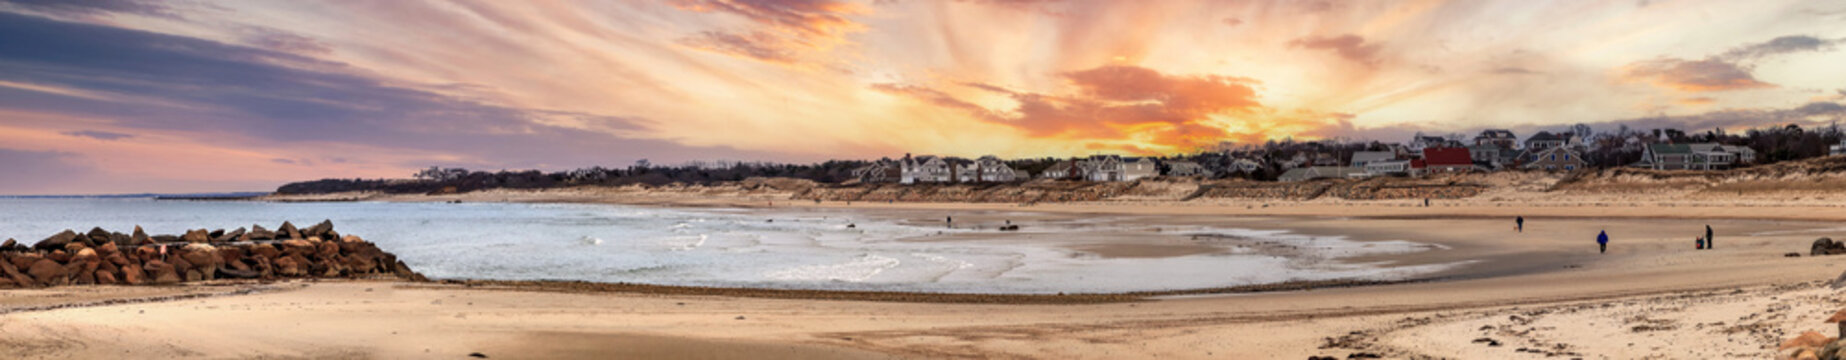 Corporation Beach in Cape Cod, Massachusetts at sunset.